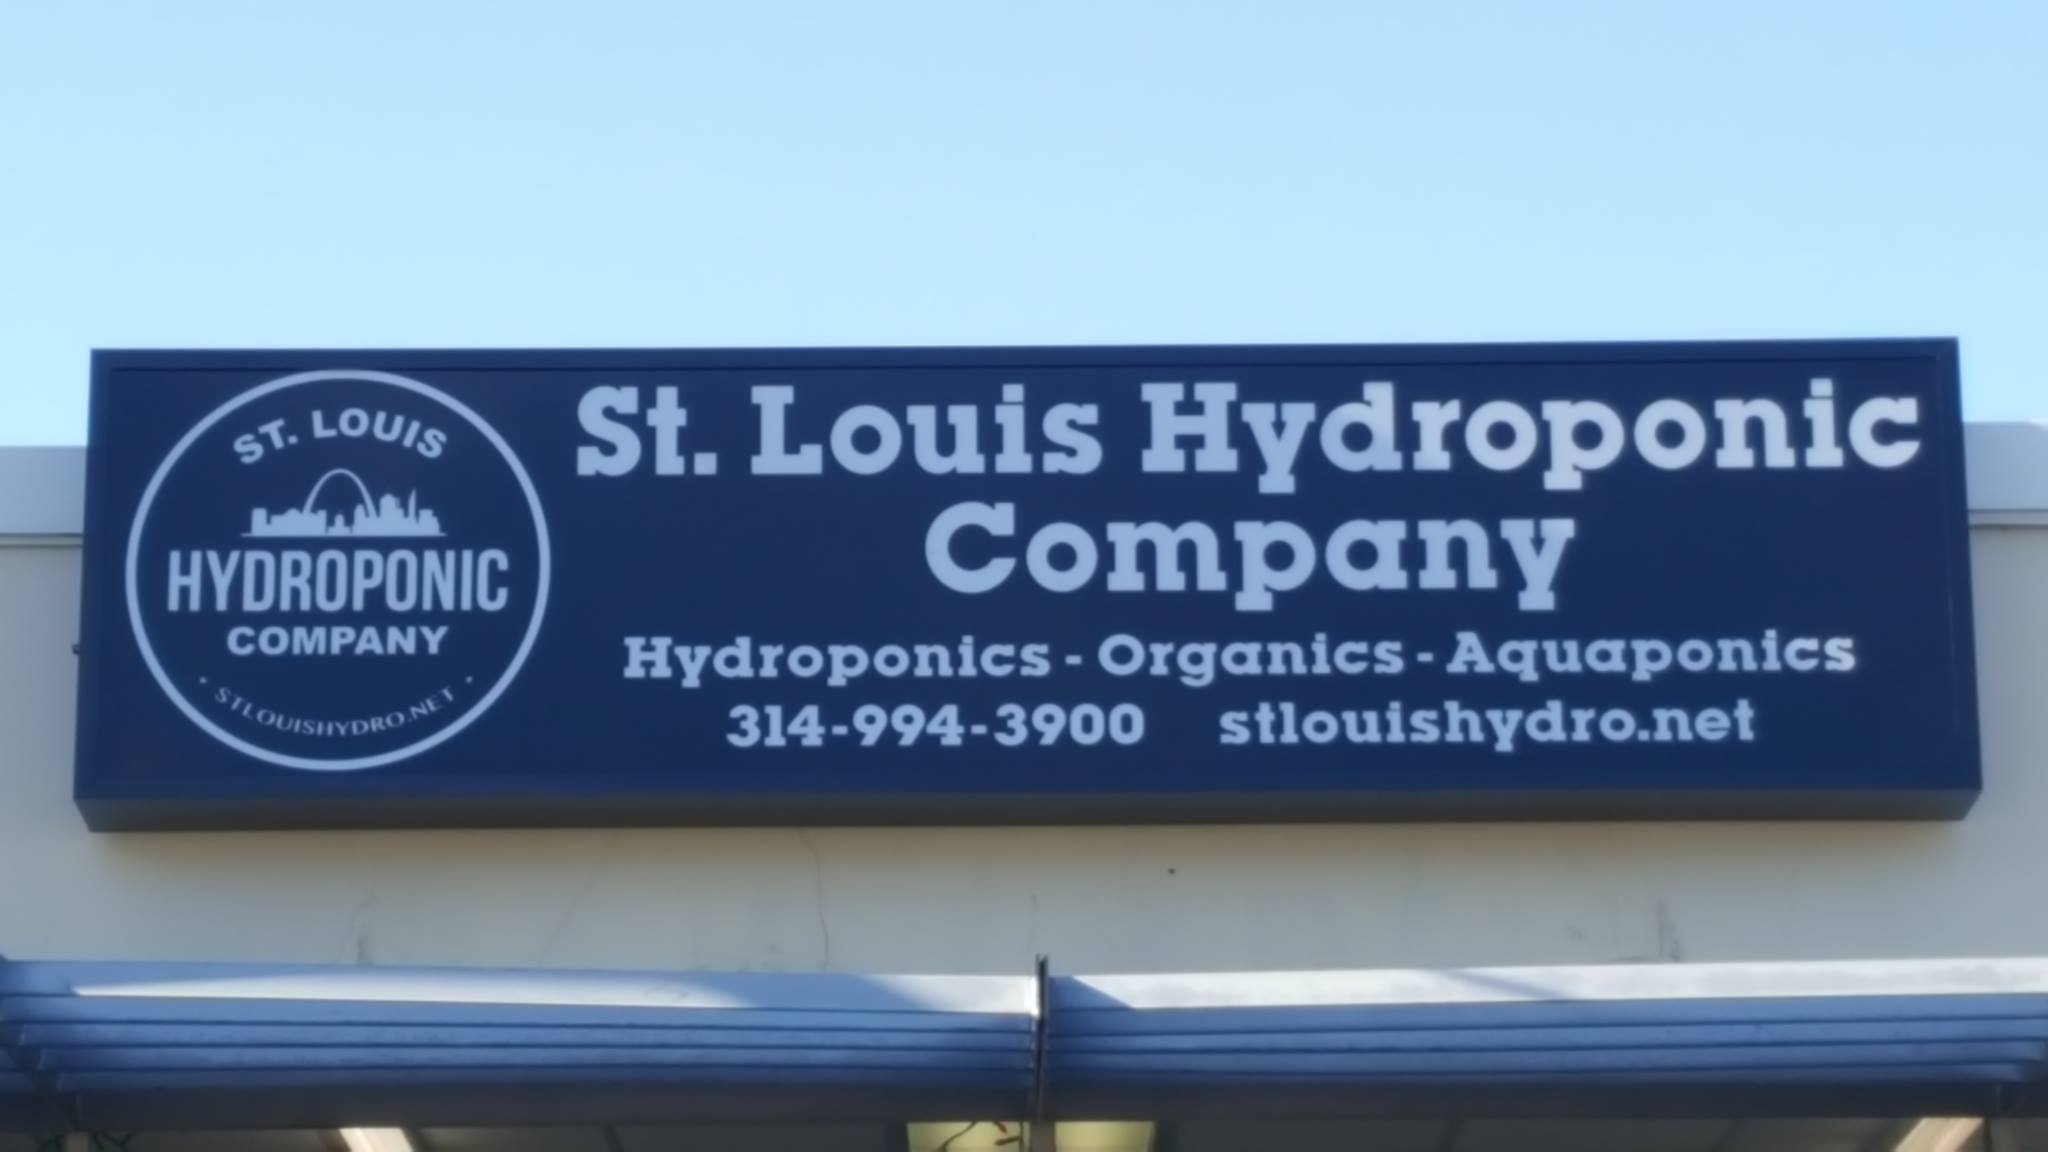 St. Louis Hydroponic Company